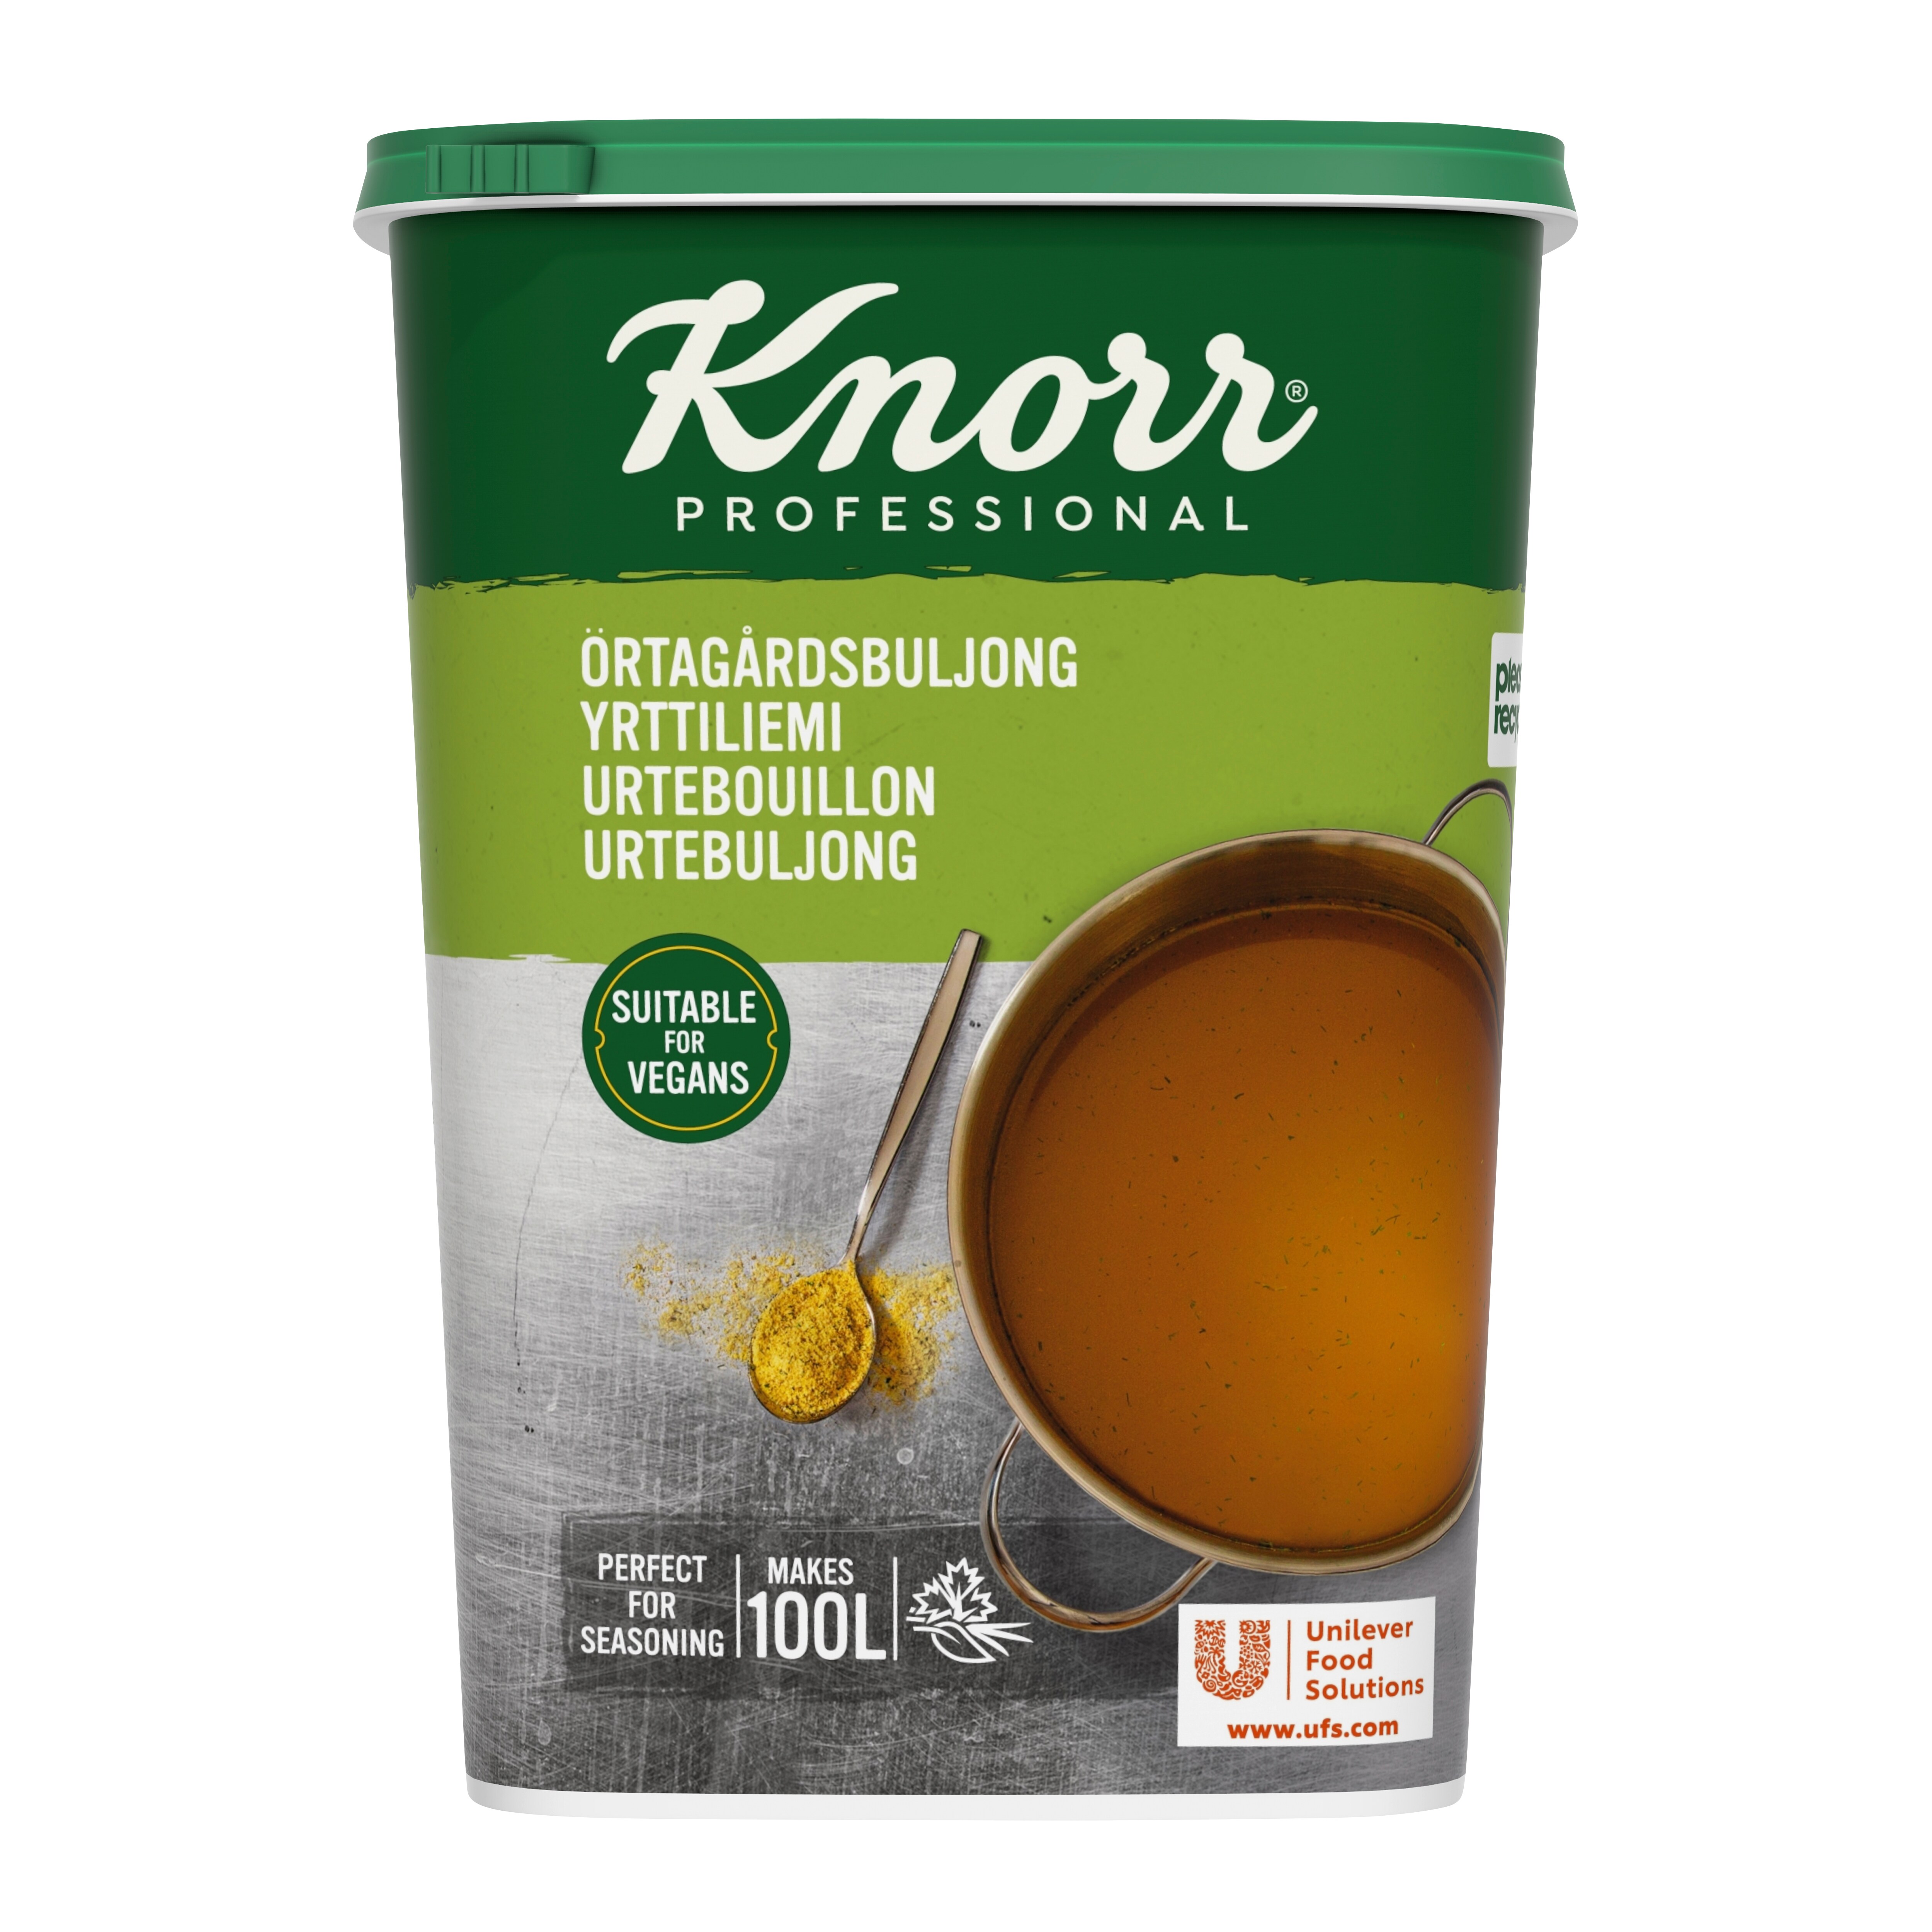 Knorr Örtagårdsbuljong, pulver 3 x 1,5 kg